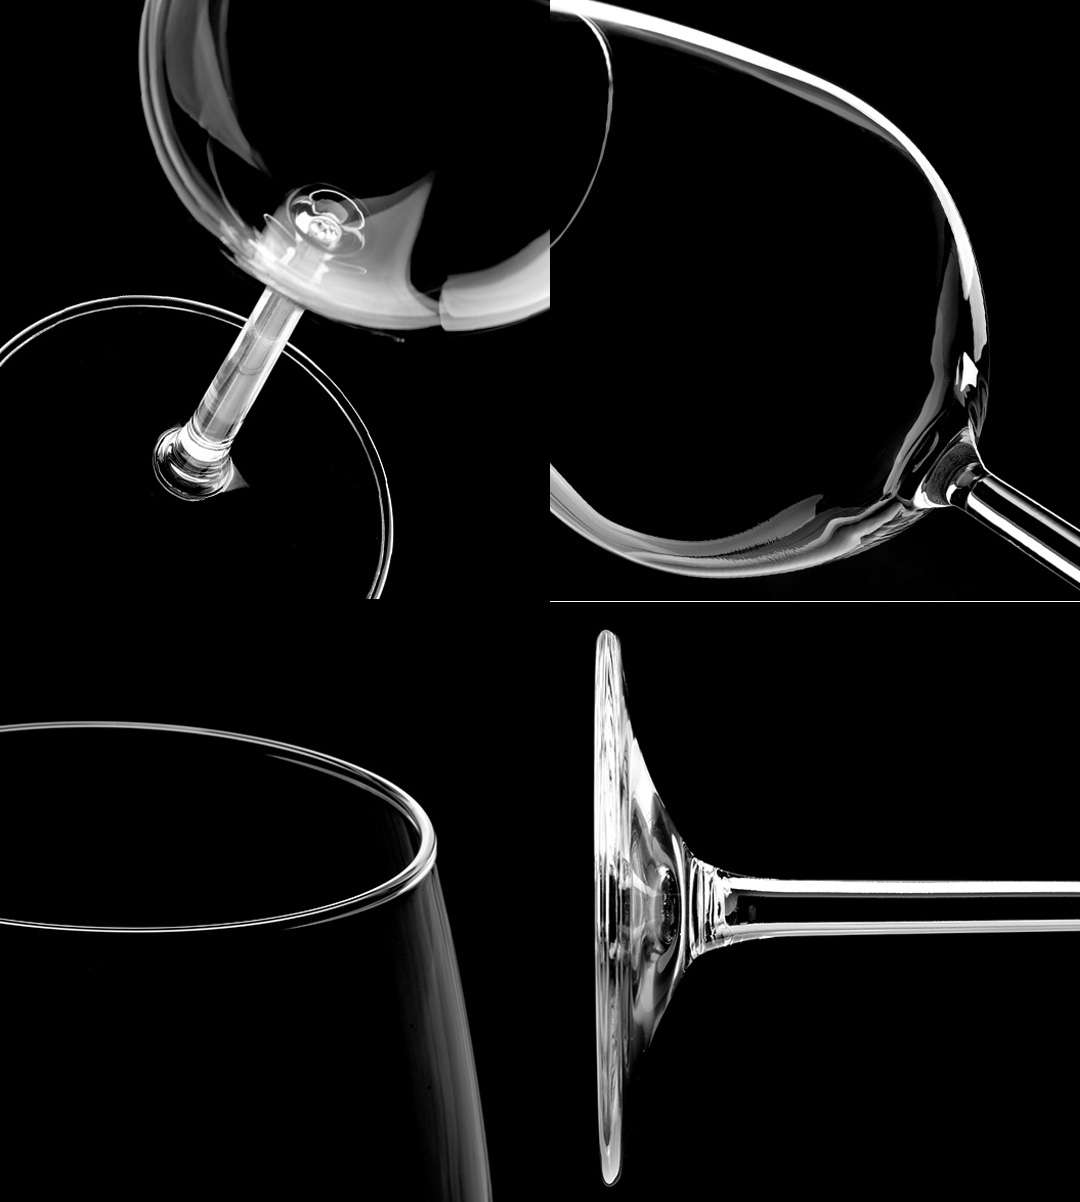 Circle Joy Crystal Glass Wine Glasses CJ-JB04